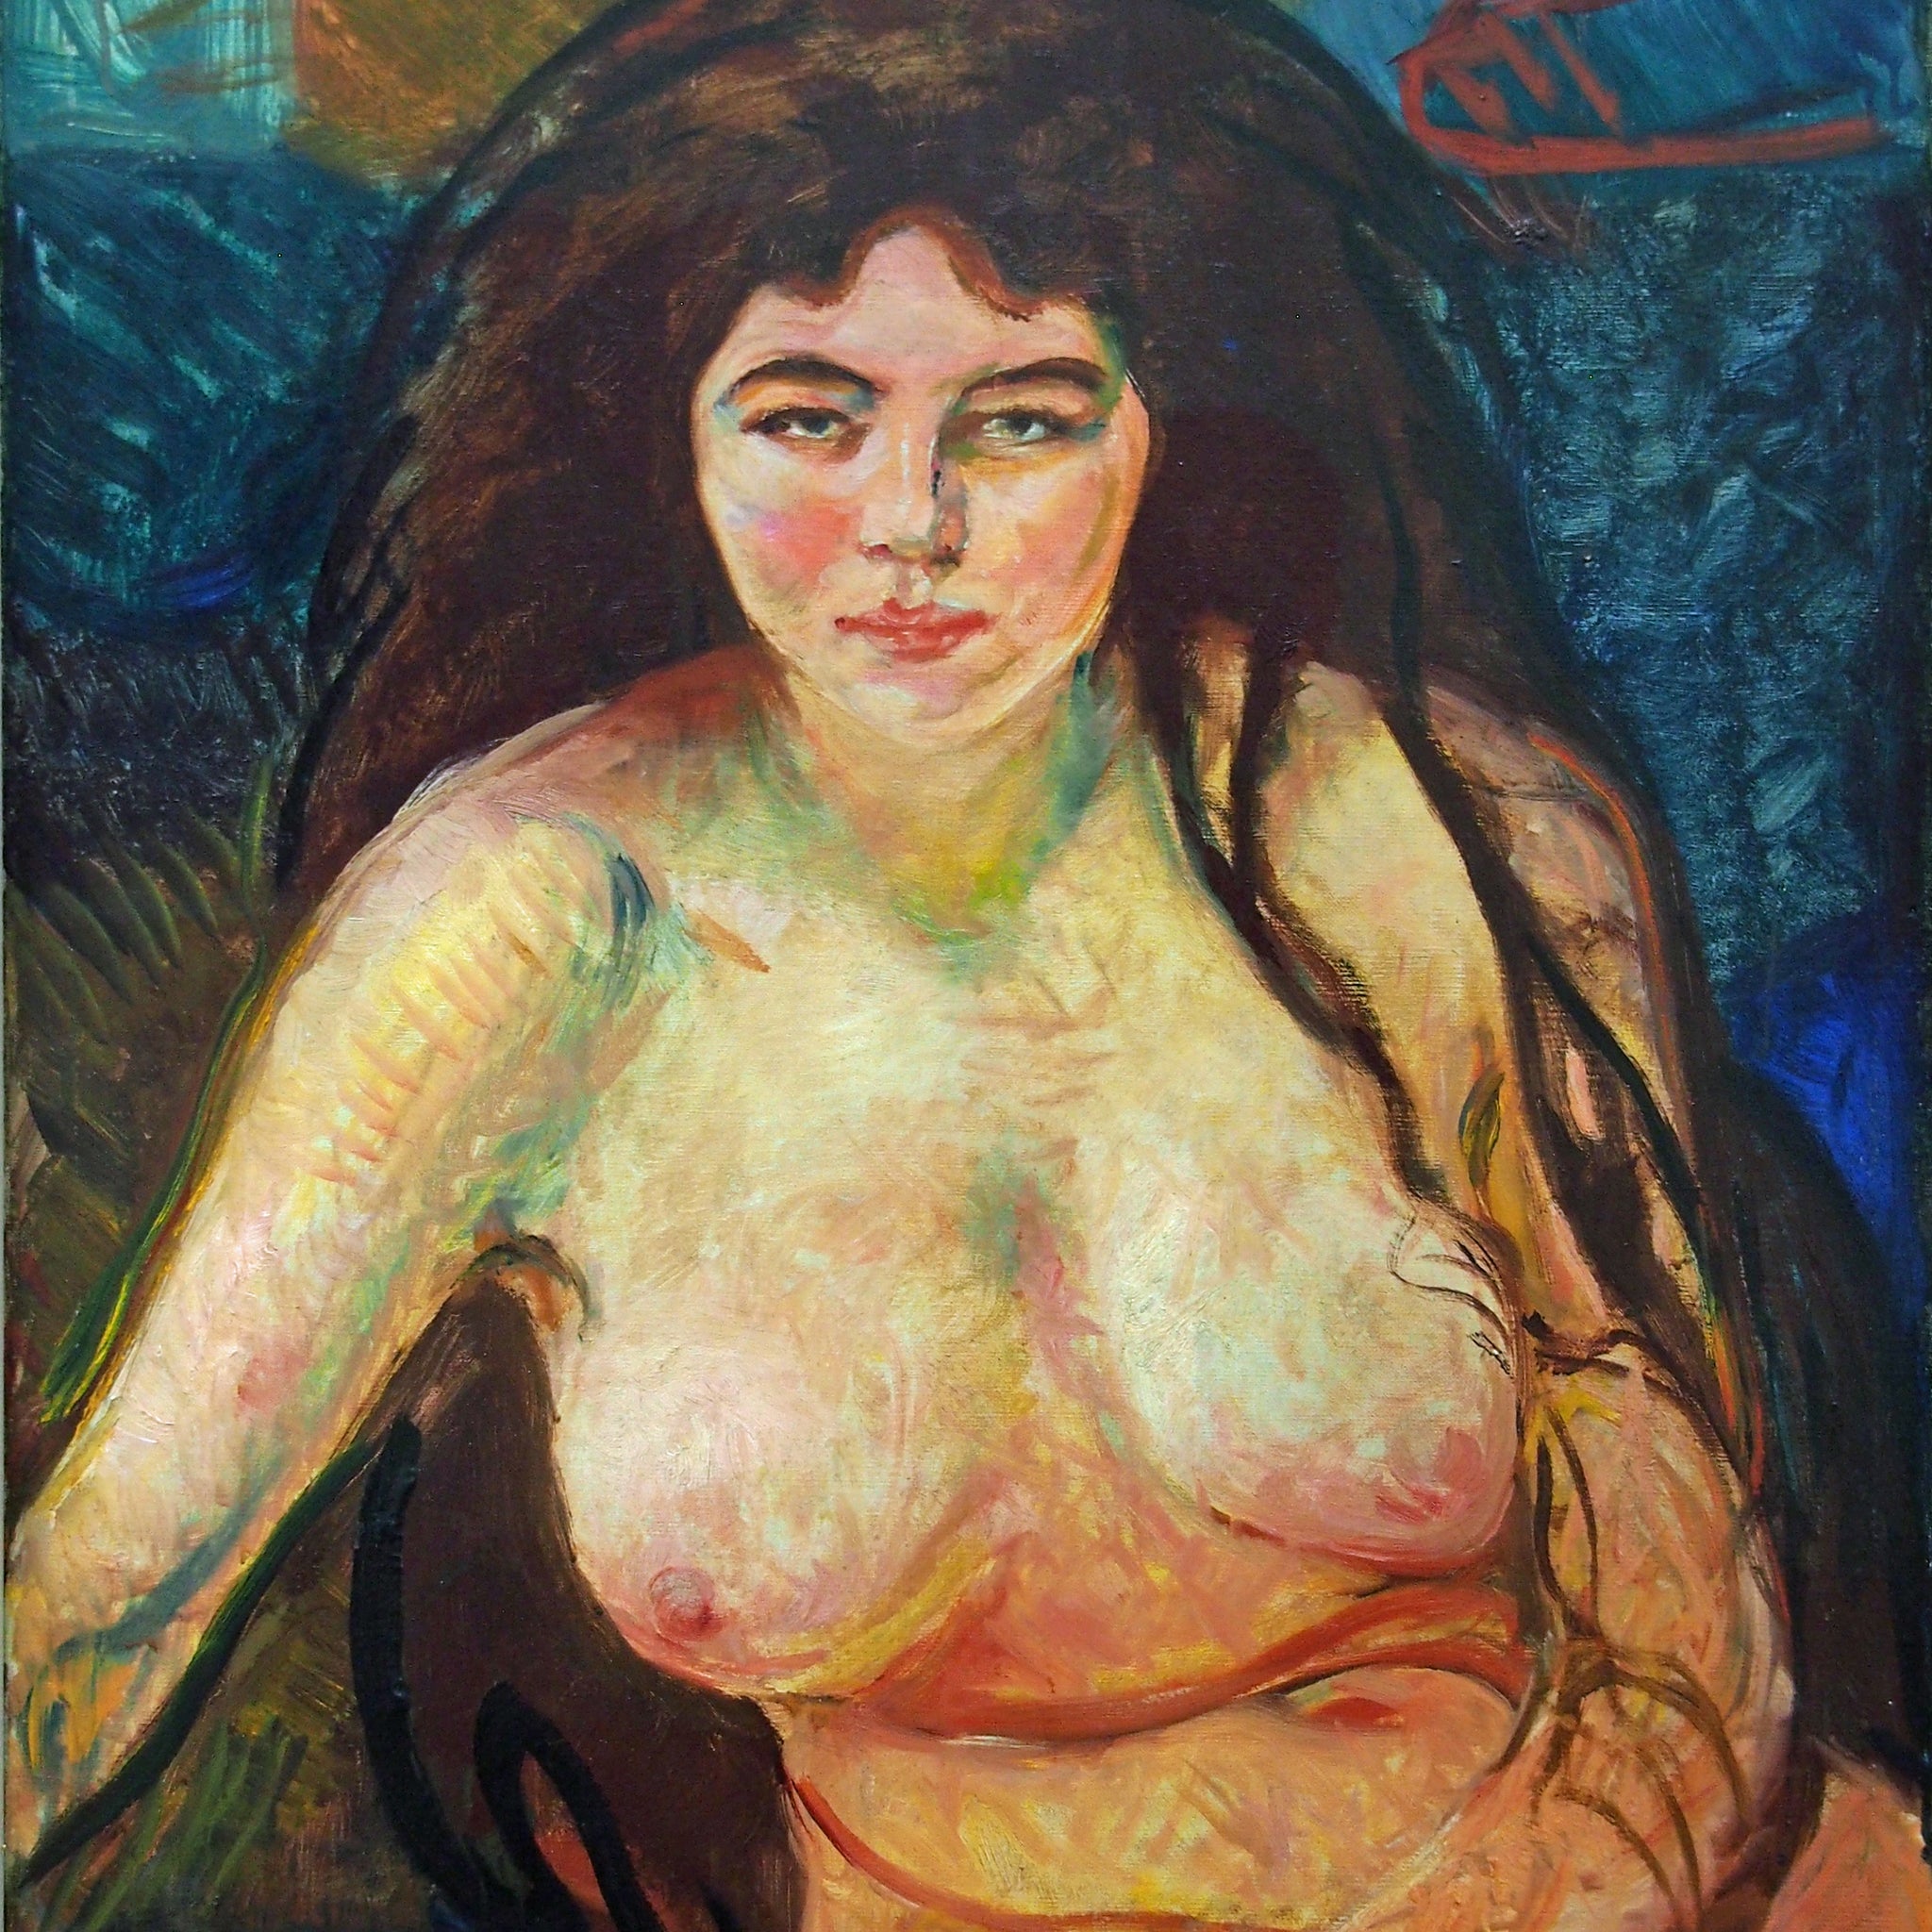 La Bête - Edvard Munch